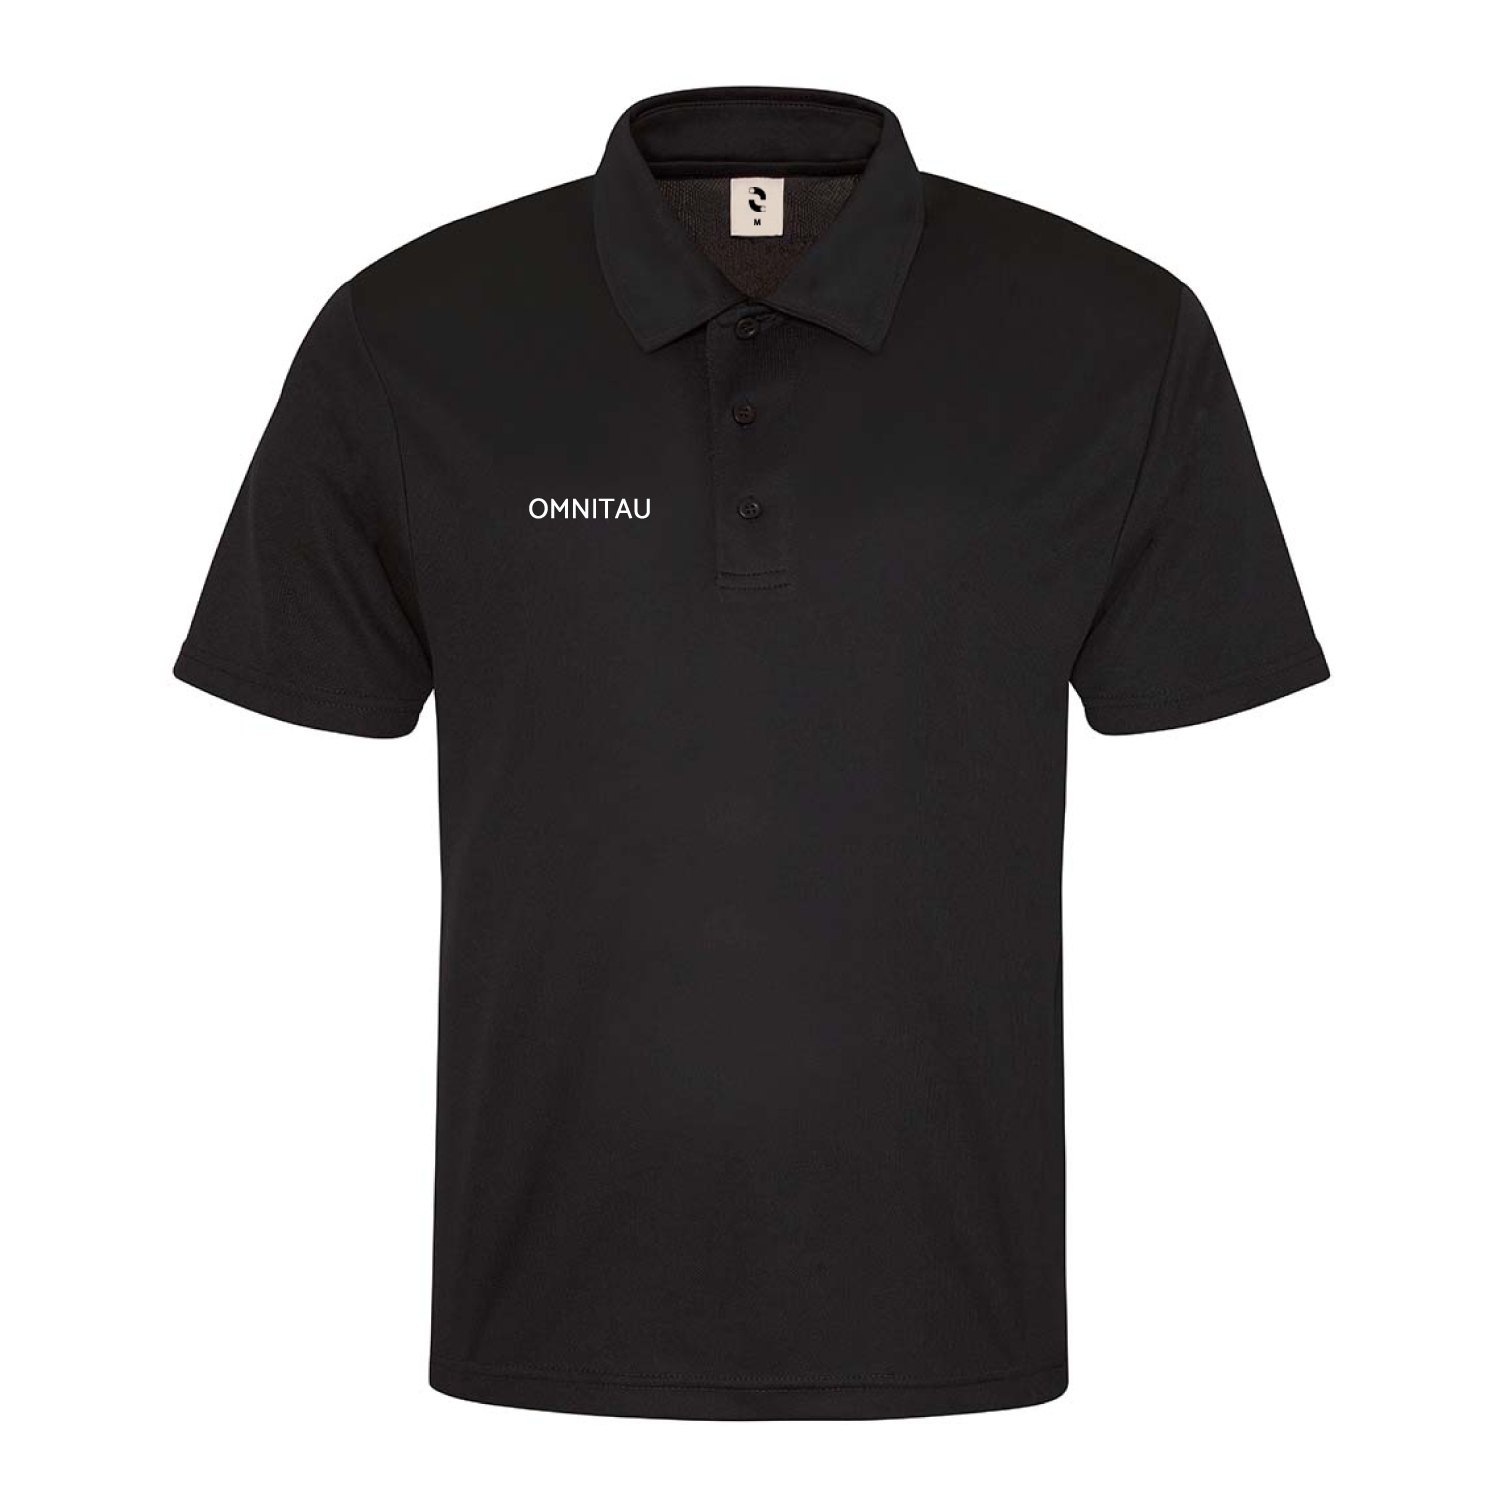 Omnitau Men's Team Sports Core Cricket Polo Shirt - Black